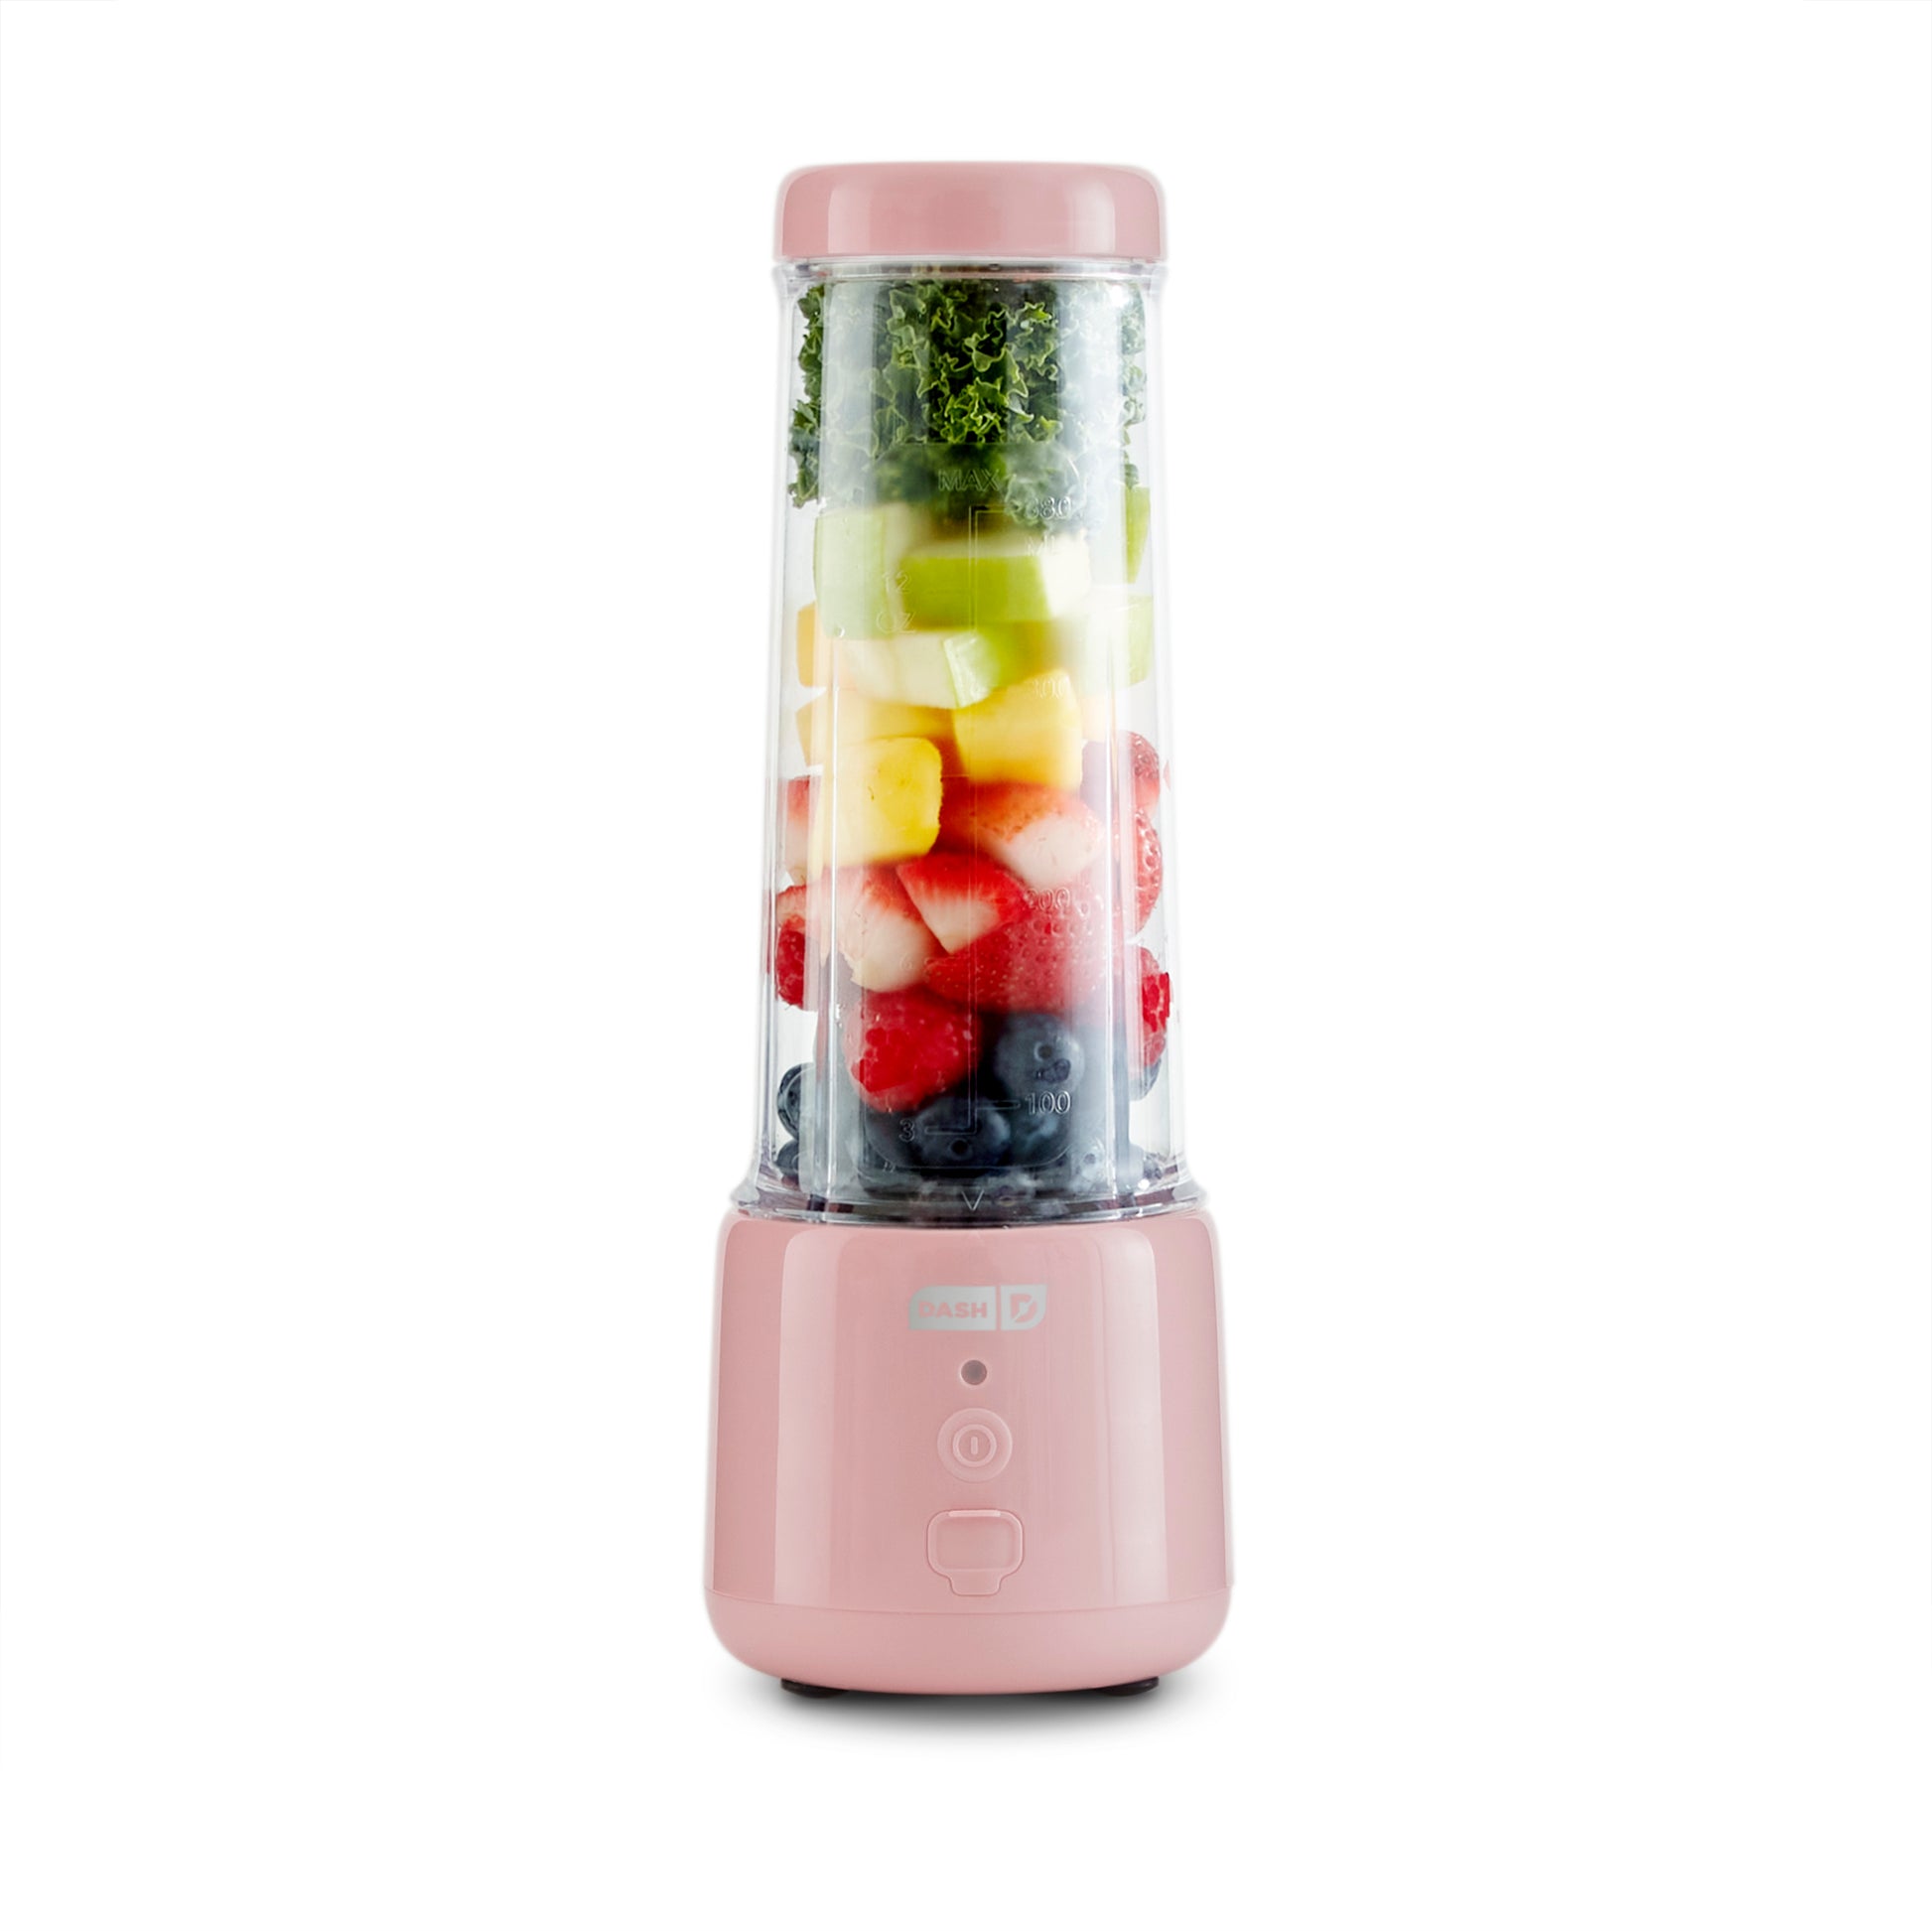 Portable Blender Fruit Vegetable Mini Juicer Cup Smoothie Outdoor Drink  Mixer